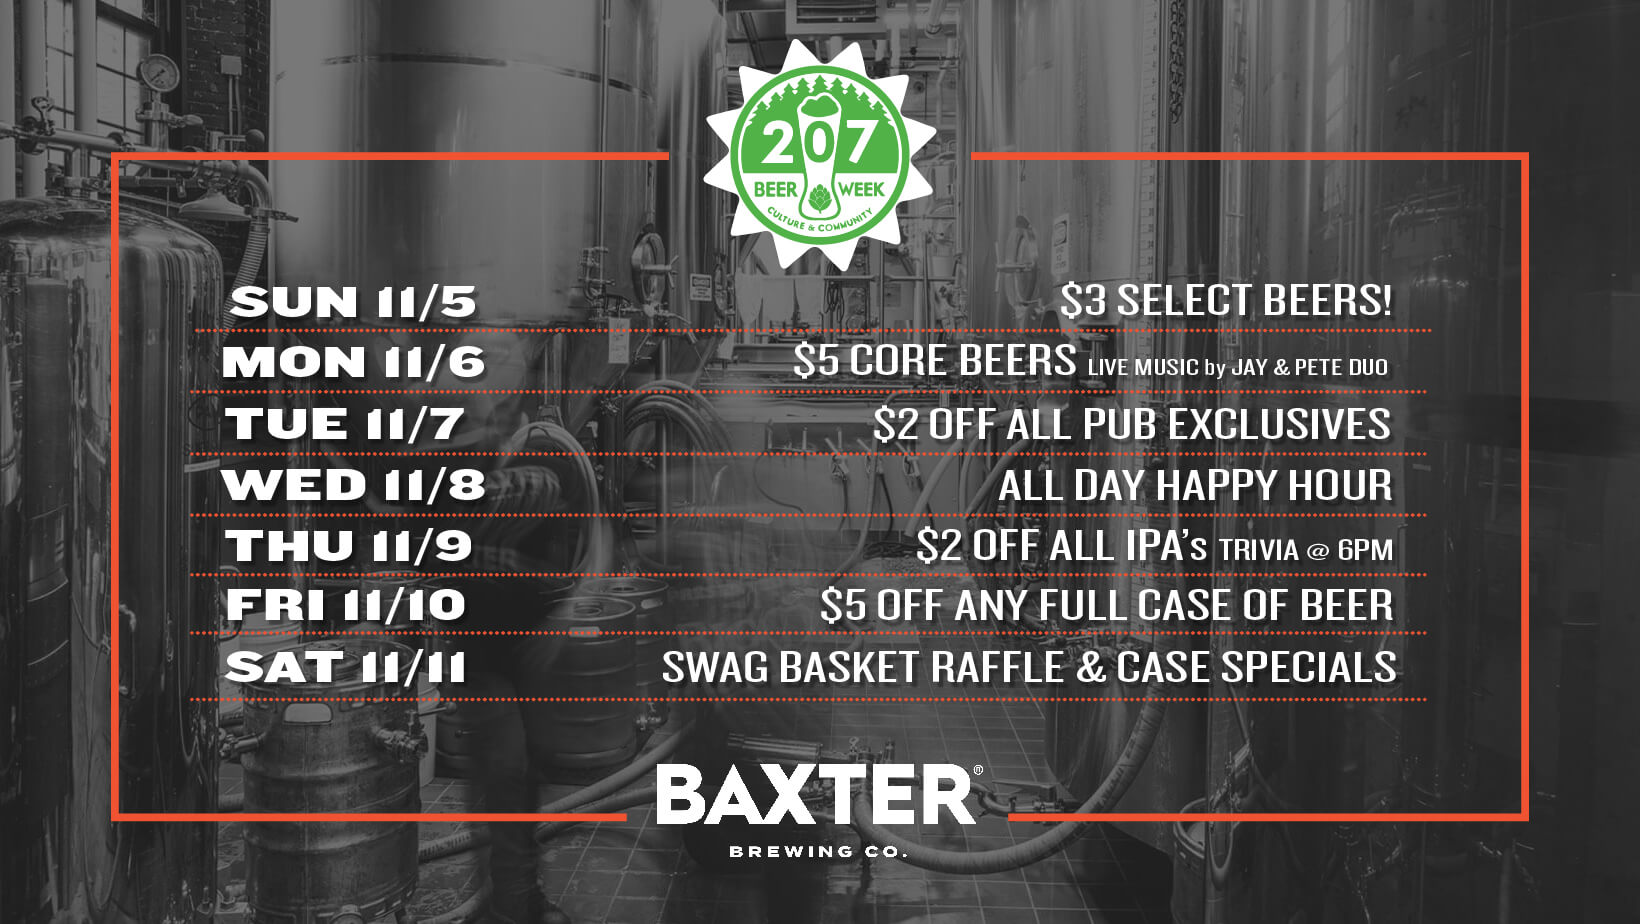 Image promoting 207 beer week at The Pub at Baxter Brewing.